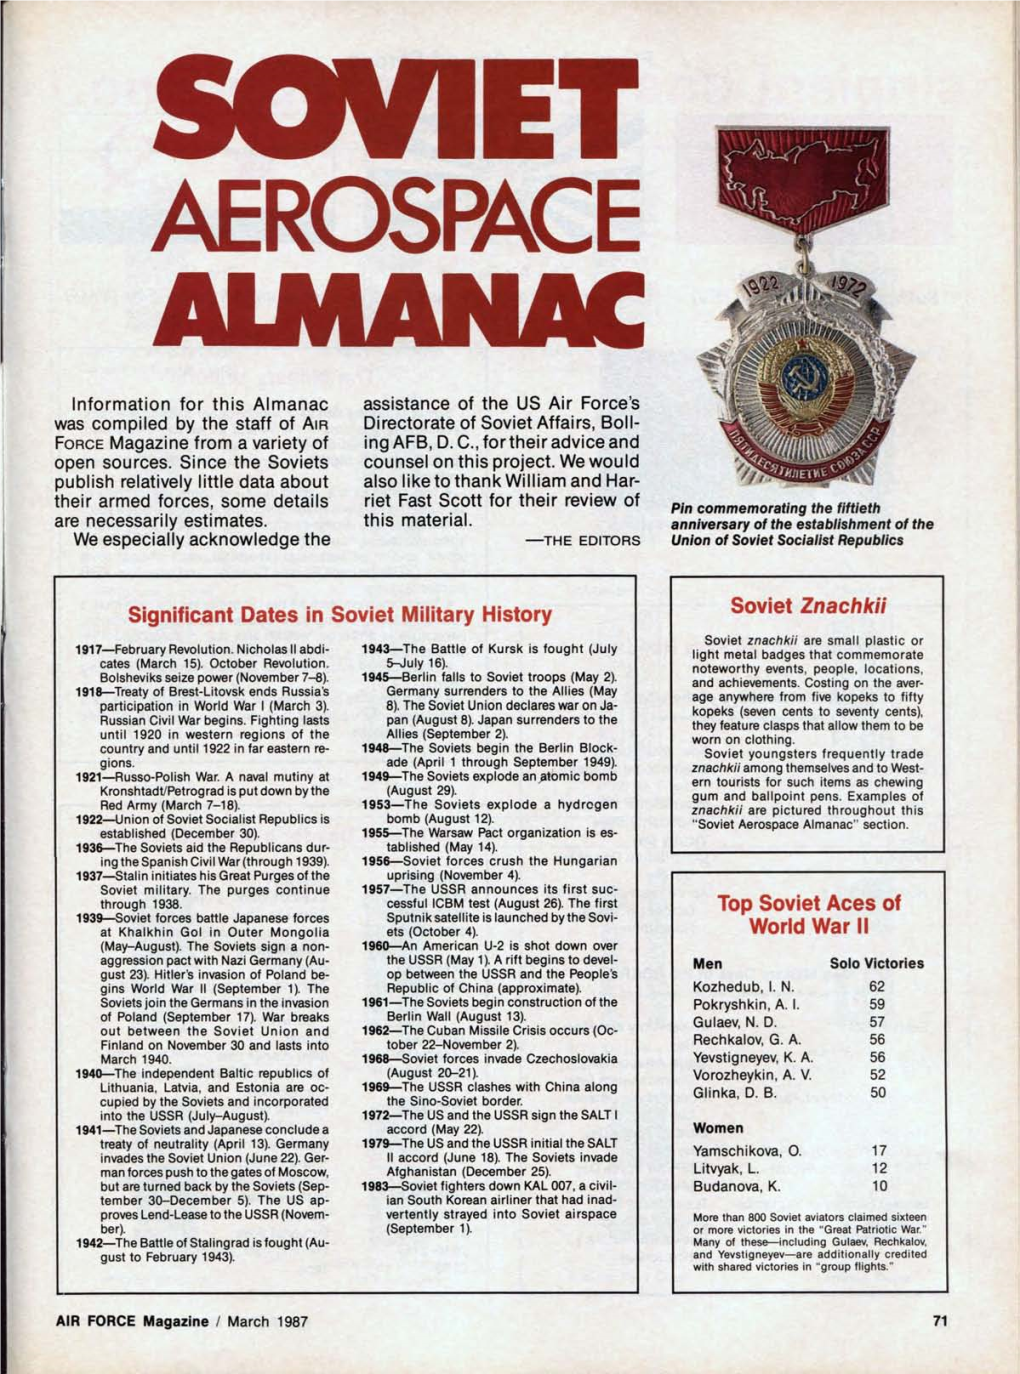 Soviet Aerospace Almanac